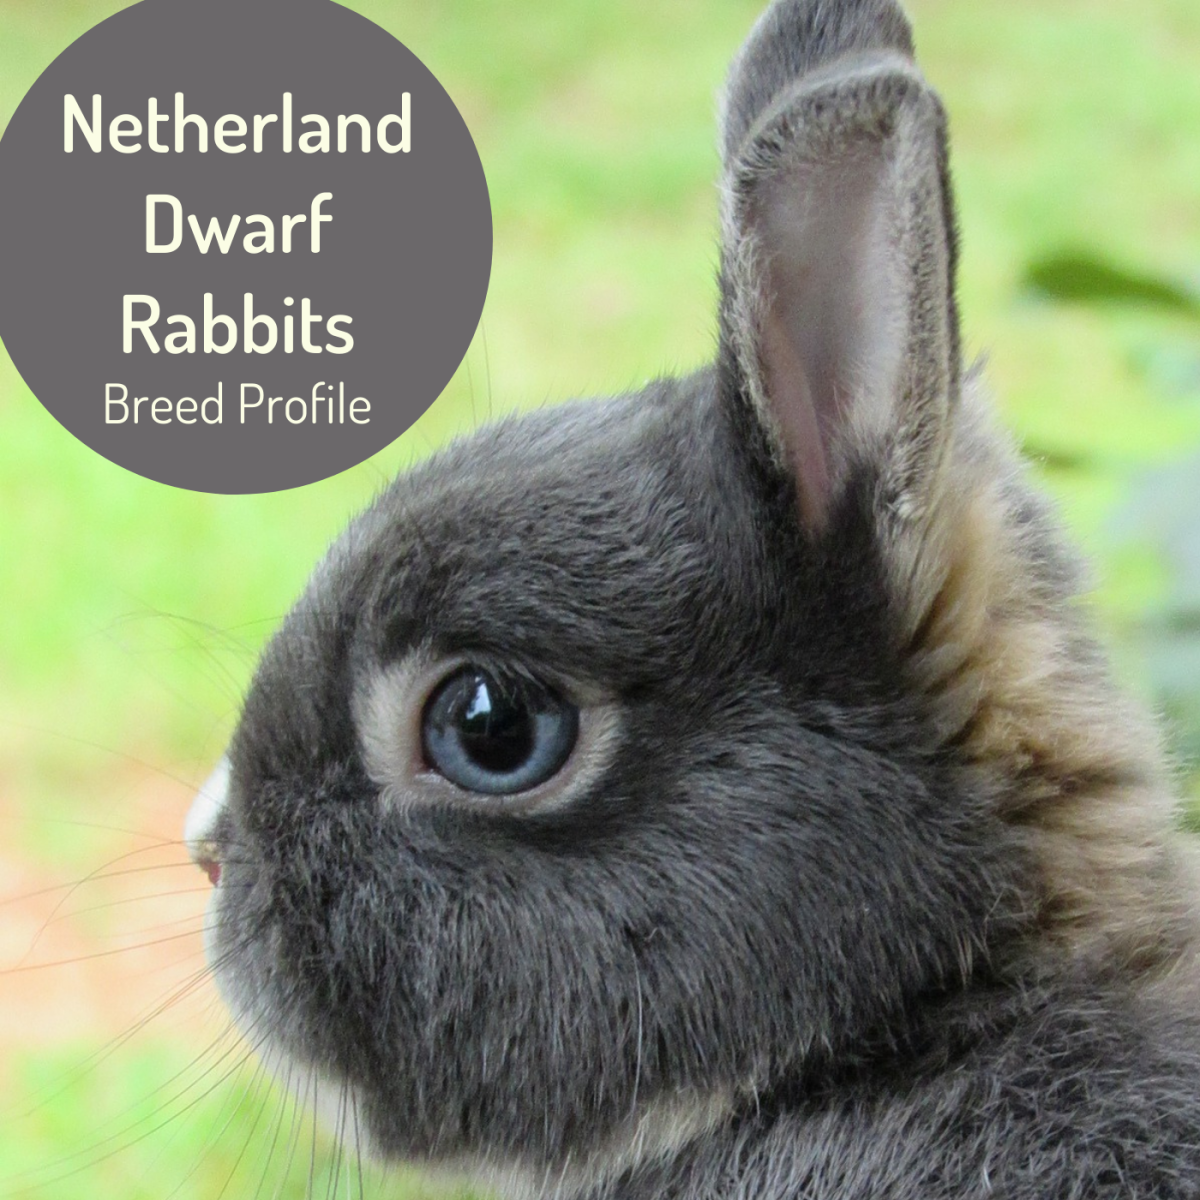 A Profile of the Netherland Dwarf Rabbit